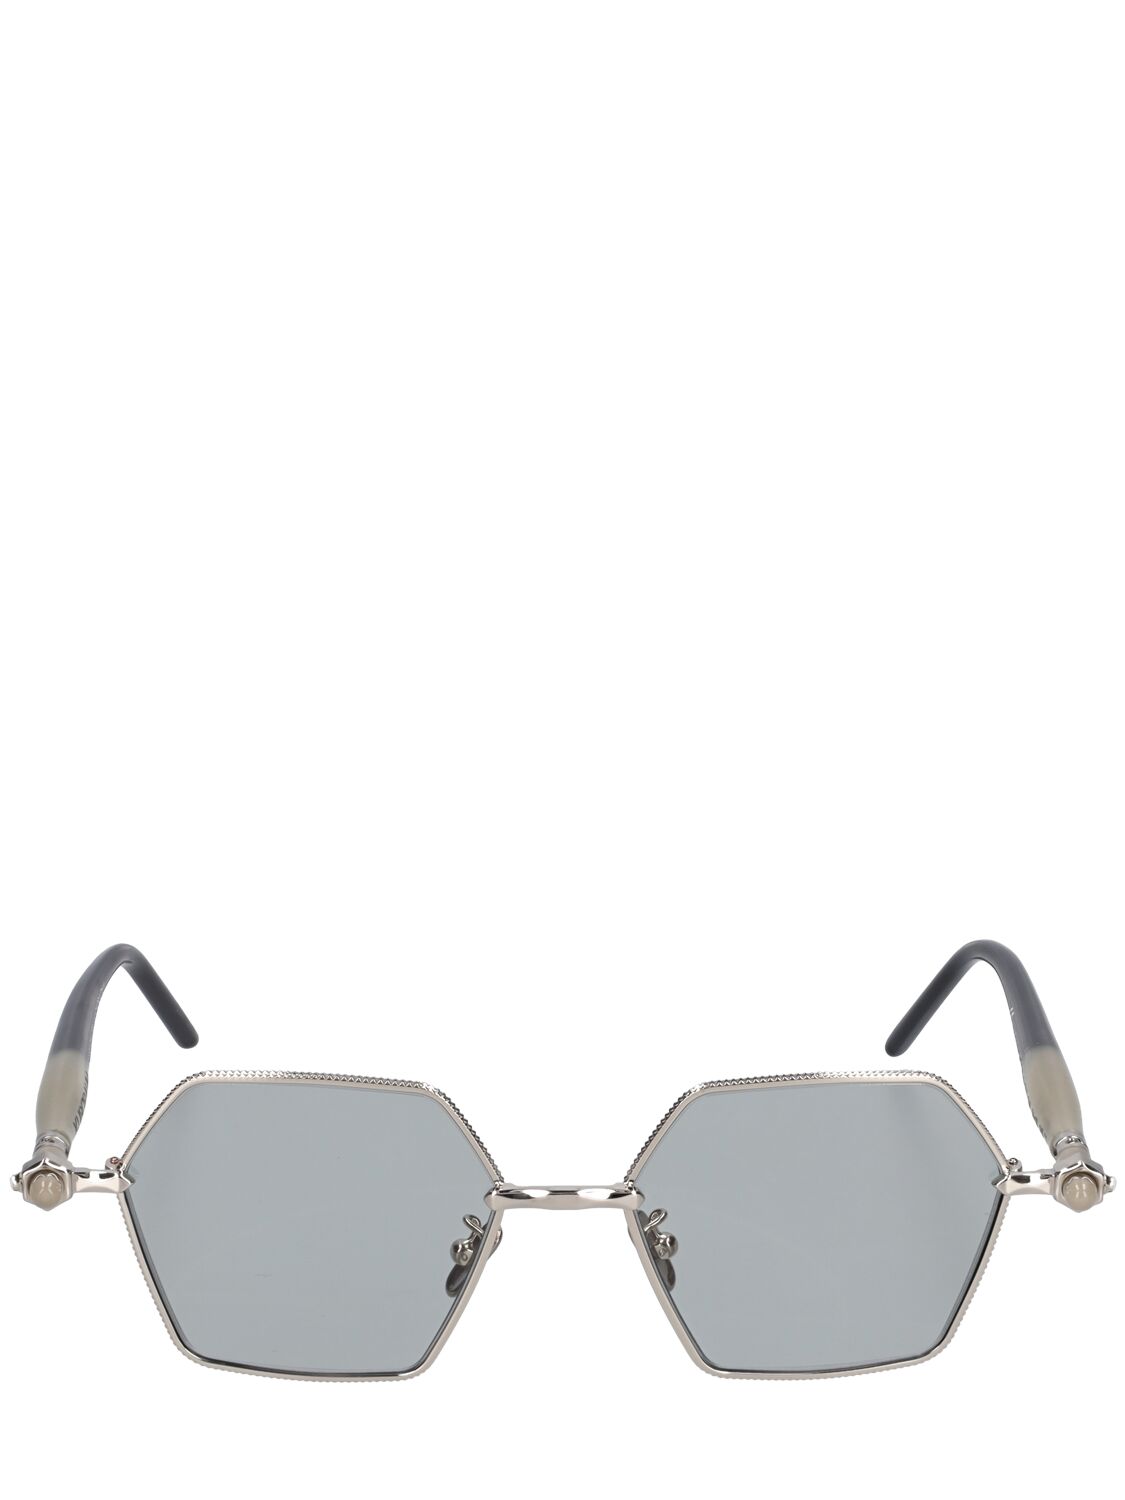 Kuboraum Berlin P70 Squared Metal Sunglasses In Silver